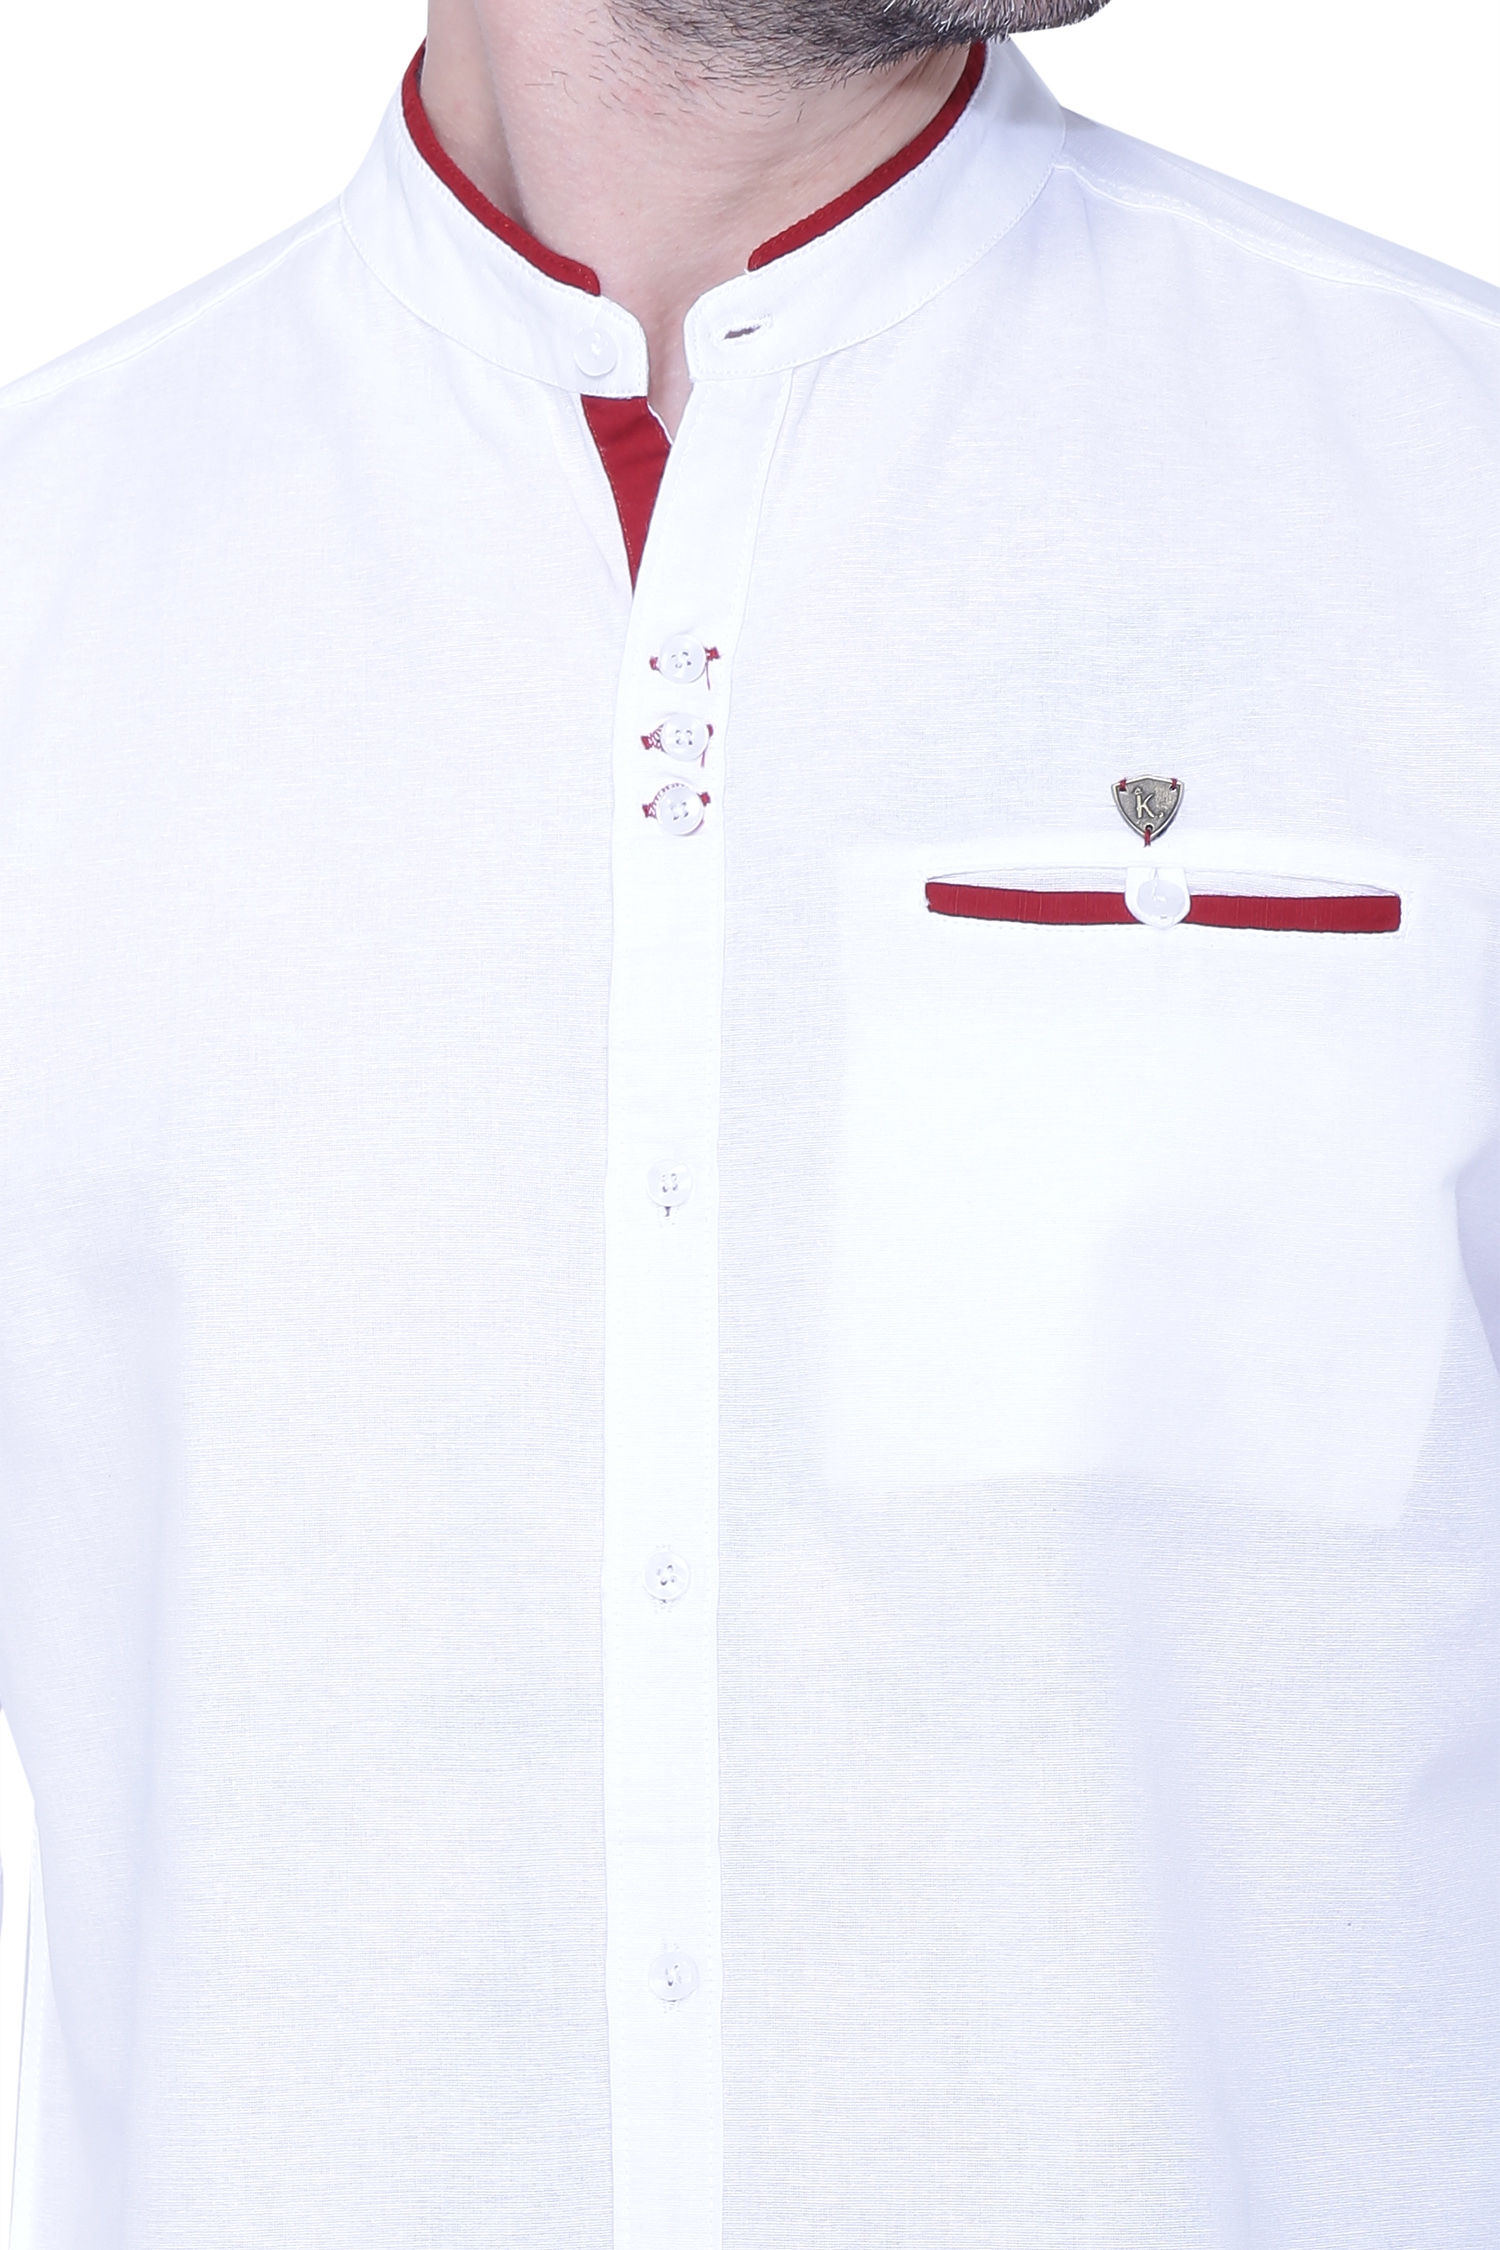 Kuons Avenue | Kuons Avenue Men's Linen Cotton Casual Shirt- KACLFS1179A 3